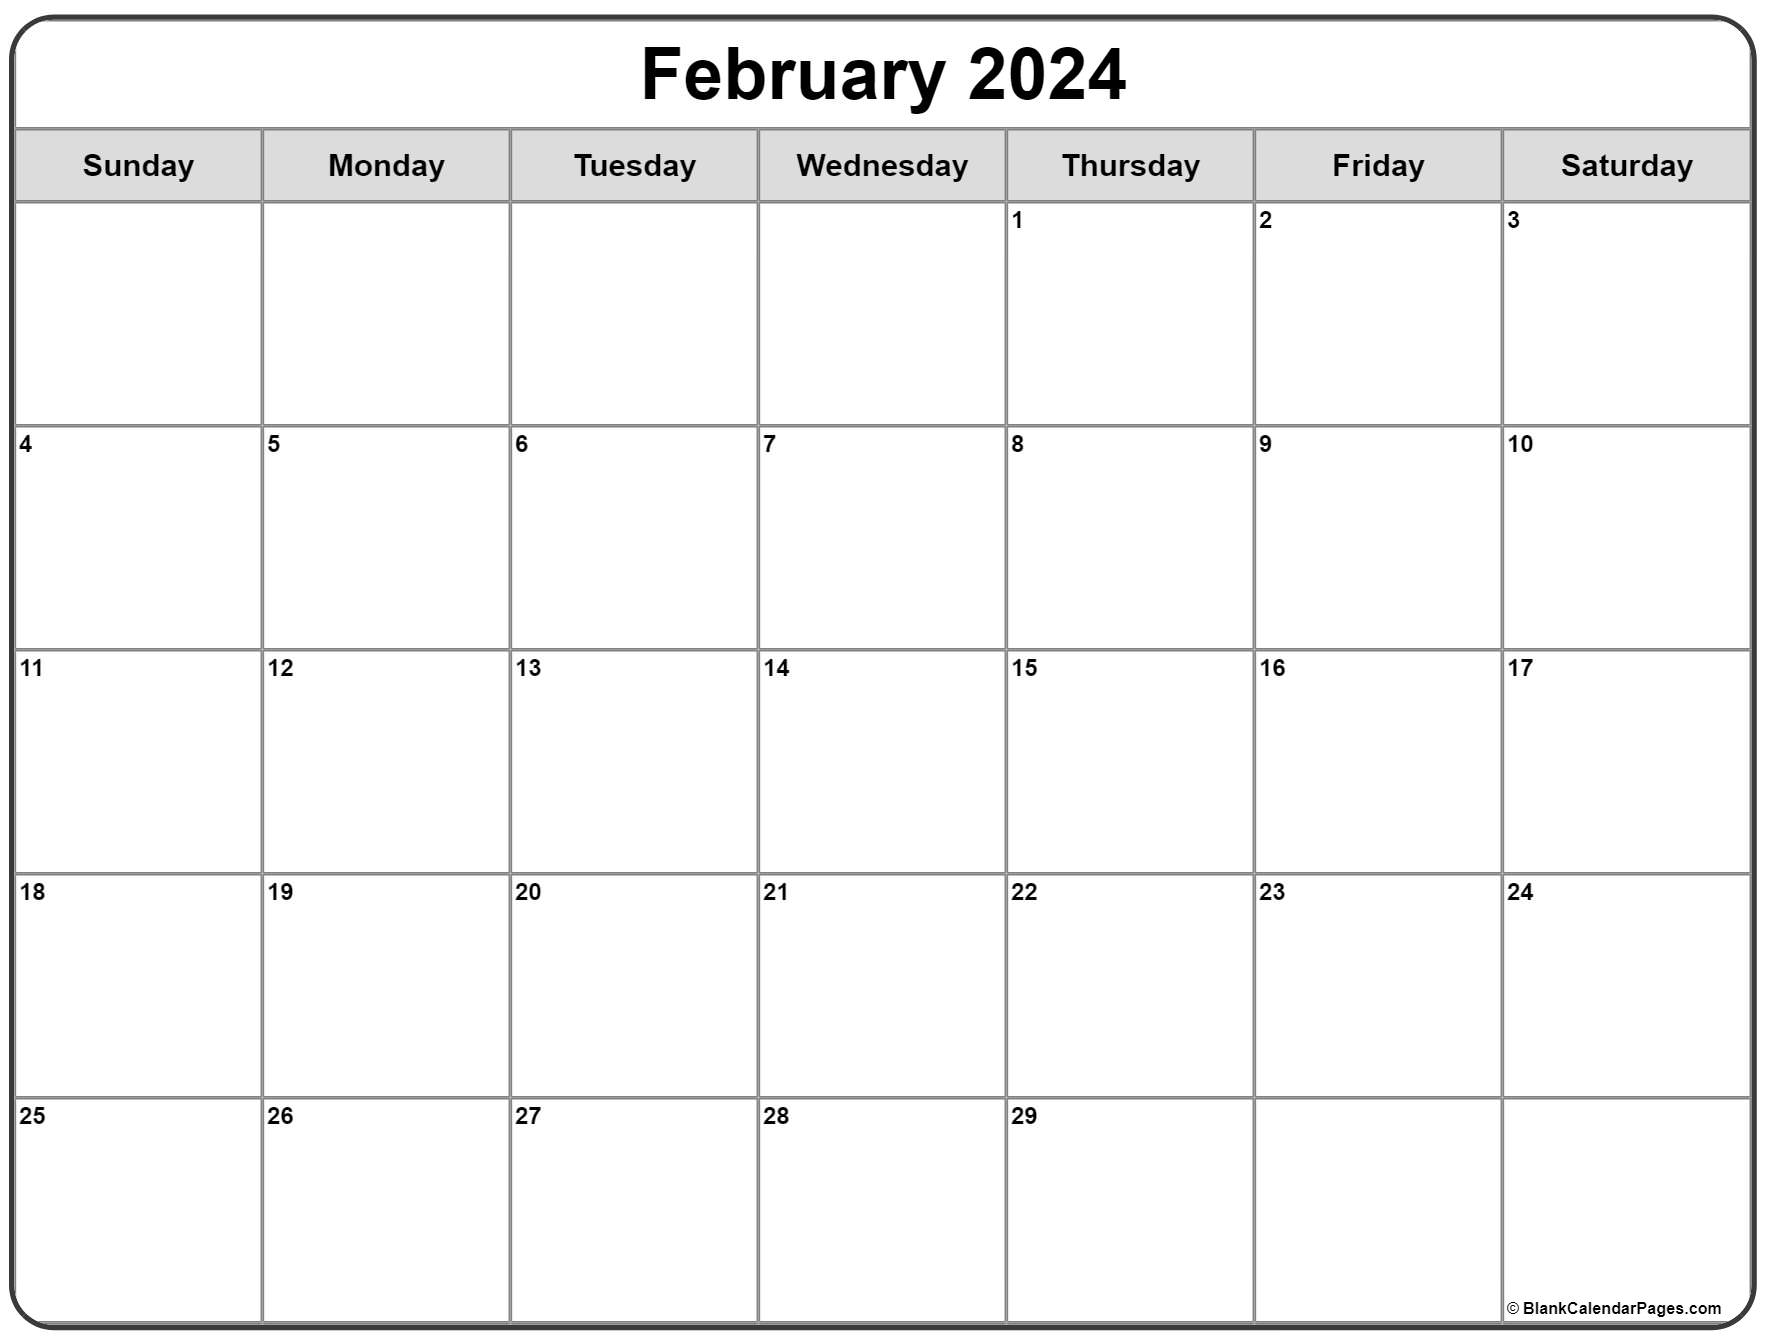 Free Printable Calendar 2022 February February 2022 Calendar | Free Printable Calendar Templates